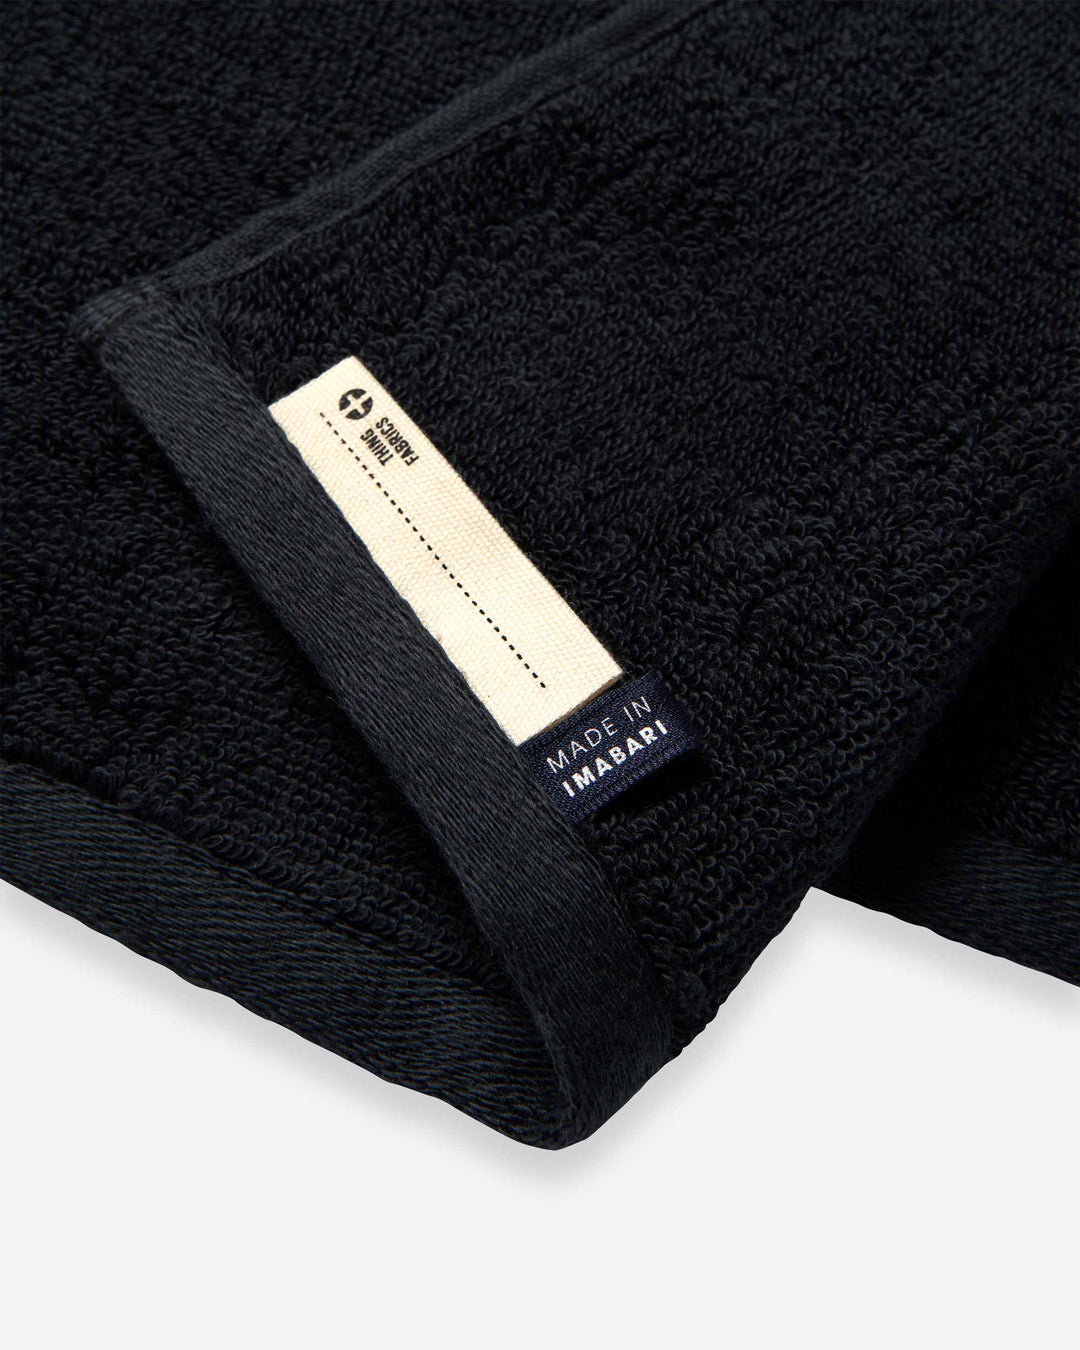 TIP TOP 365 Face Towel - Black